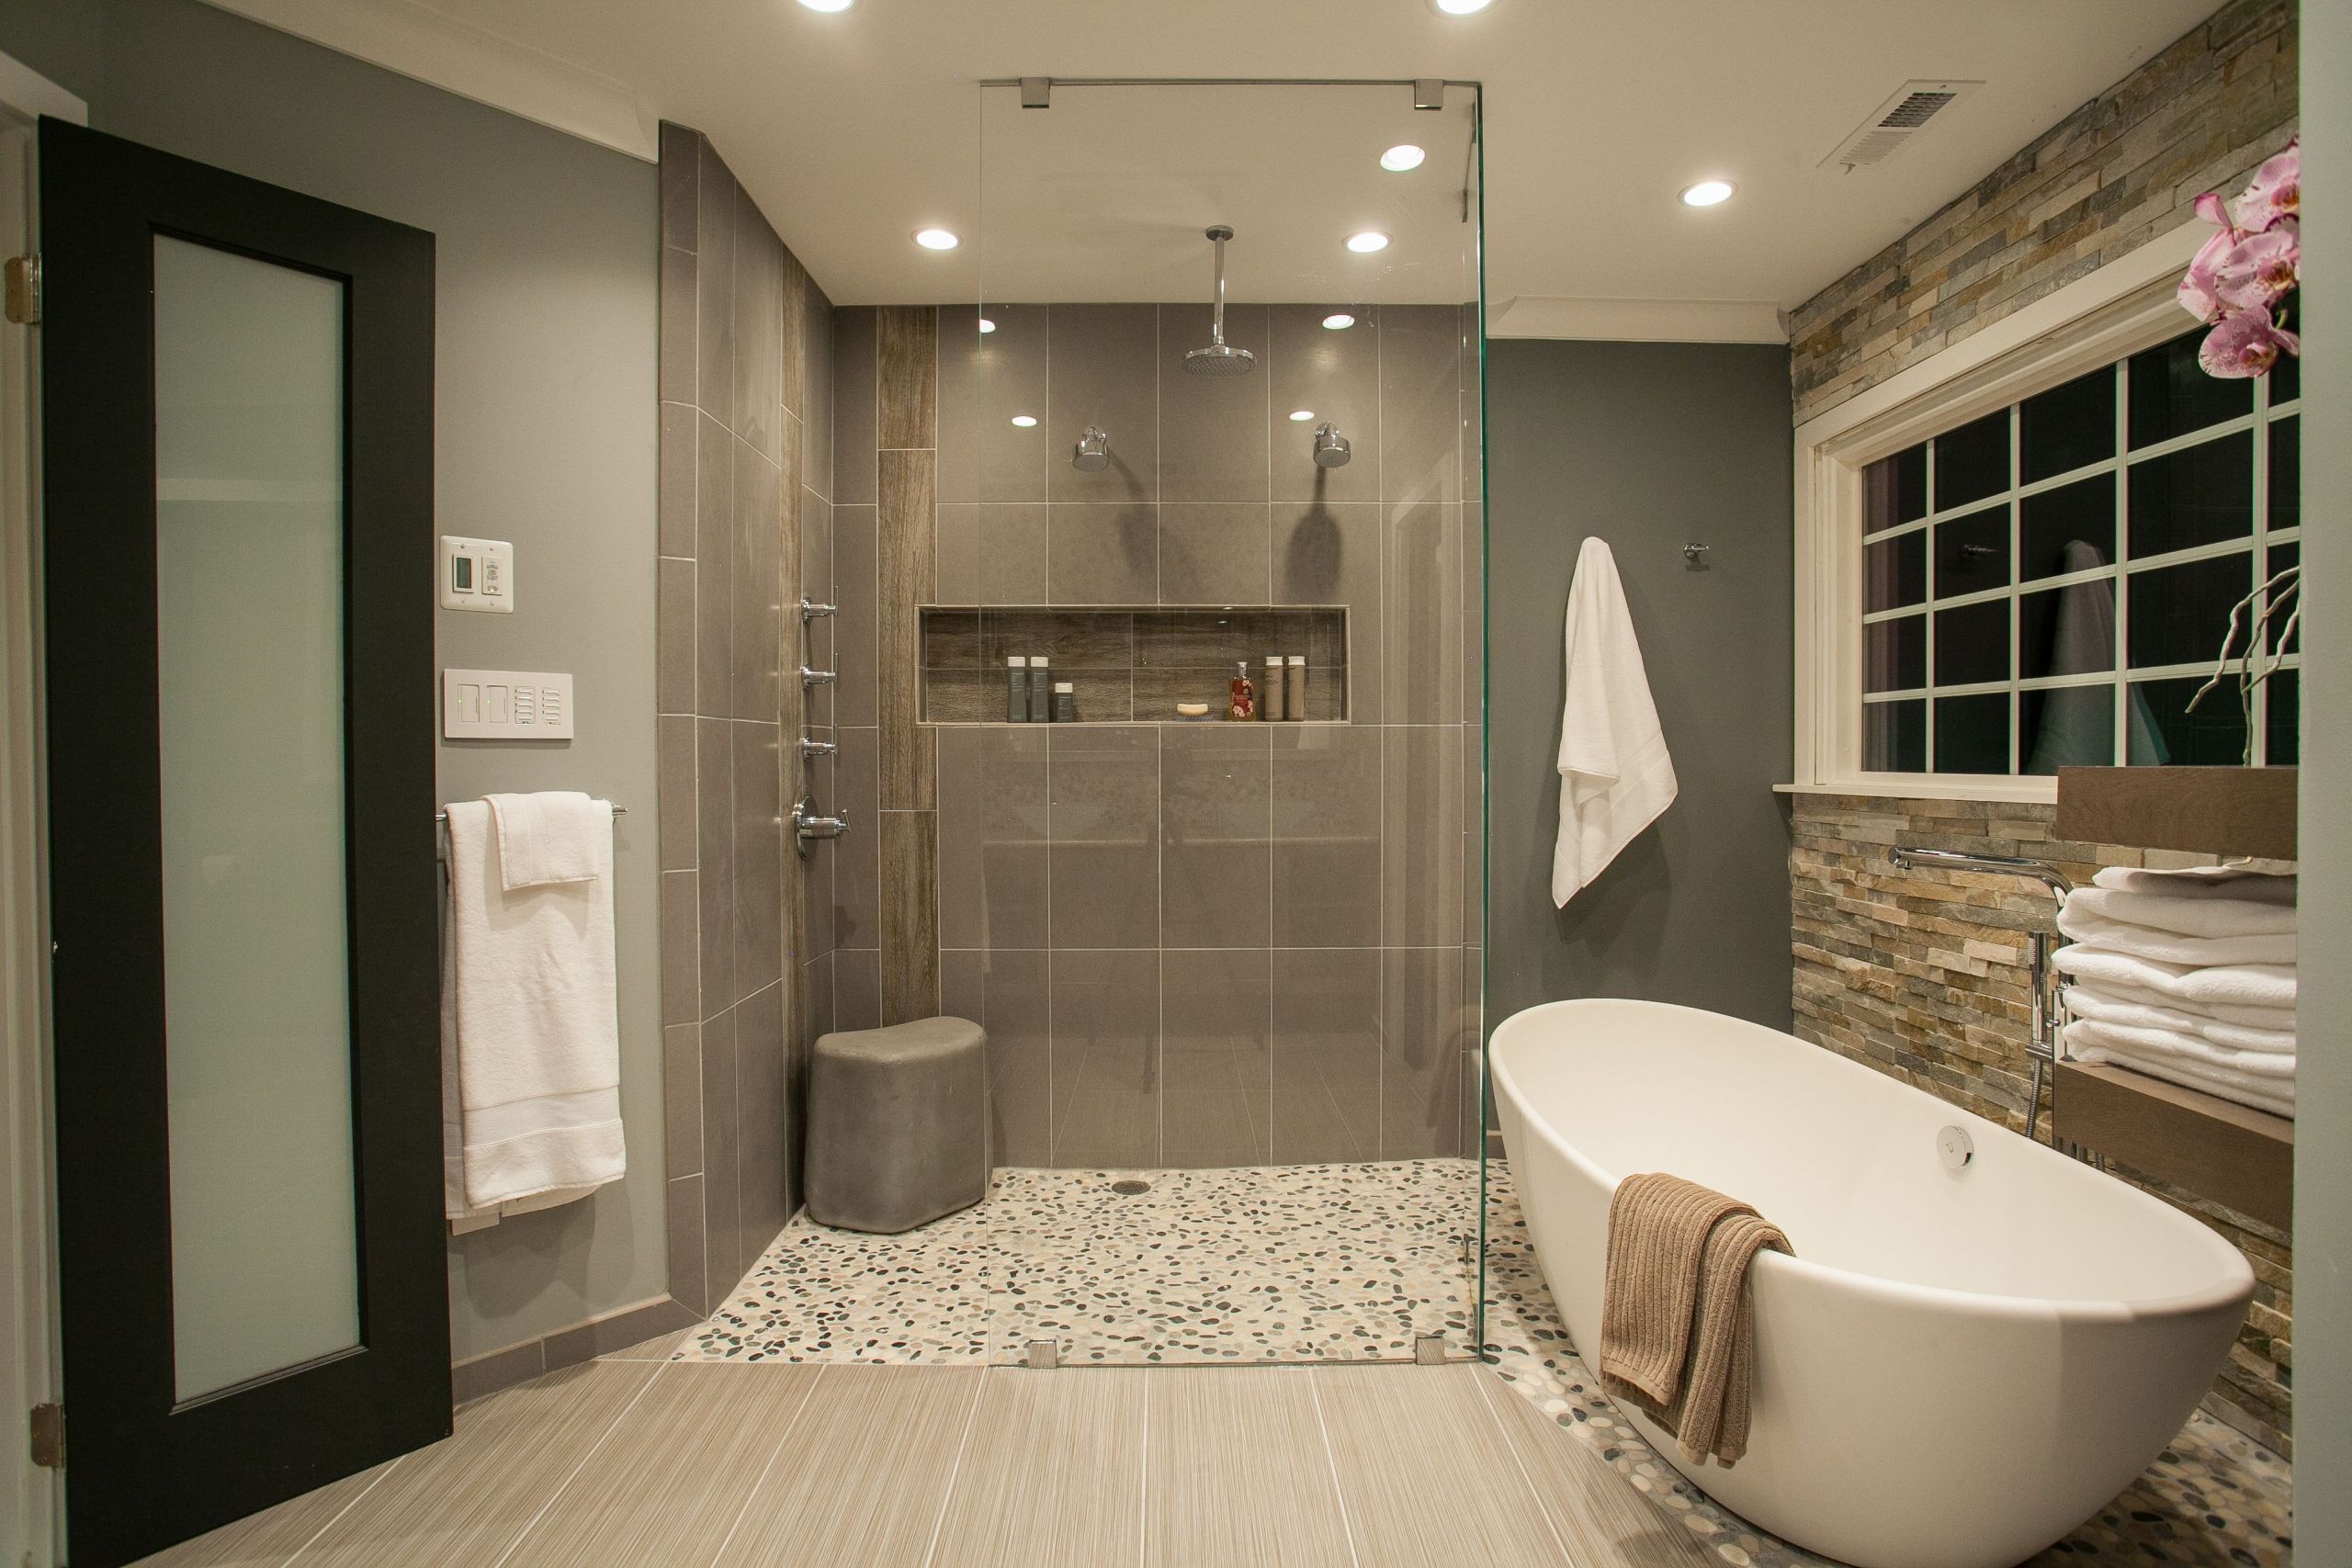 Spa Like Master Bathroom
 6 Design Ideas for Spa Like Bathrooms in 2019